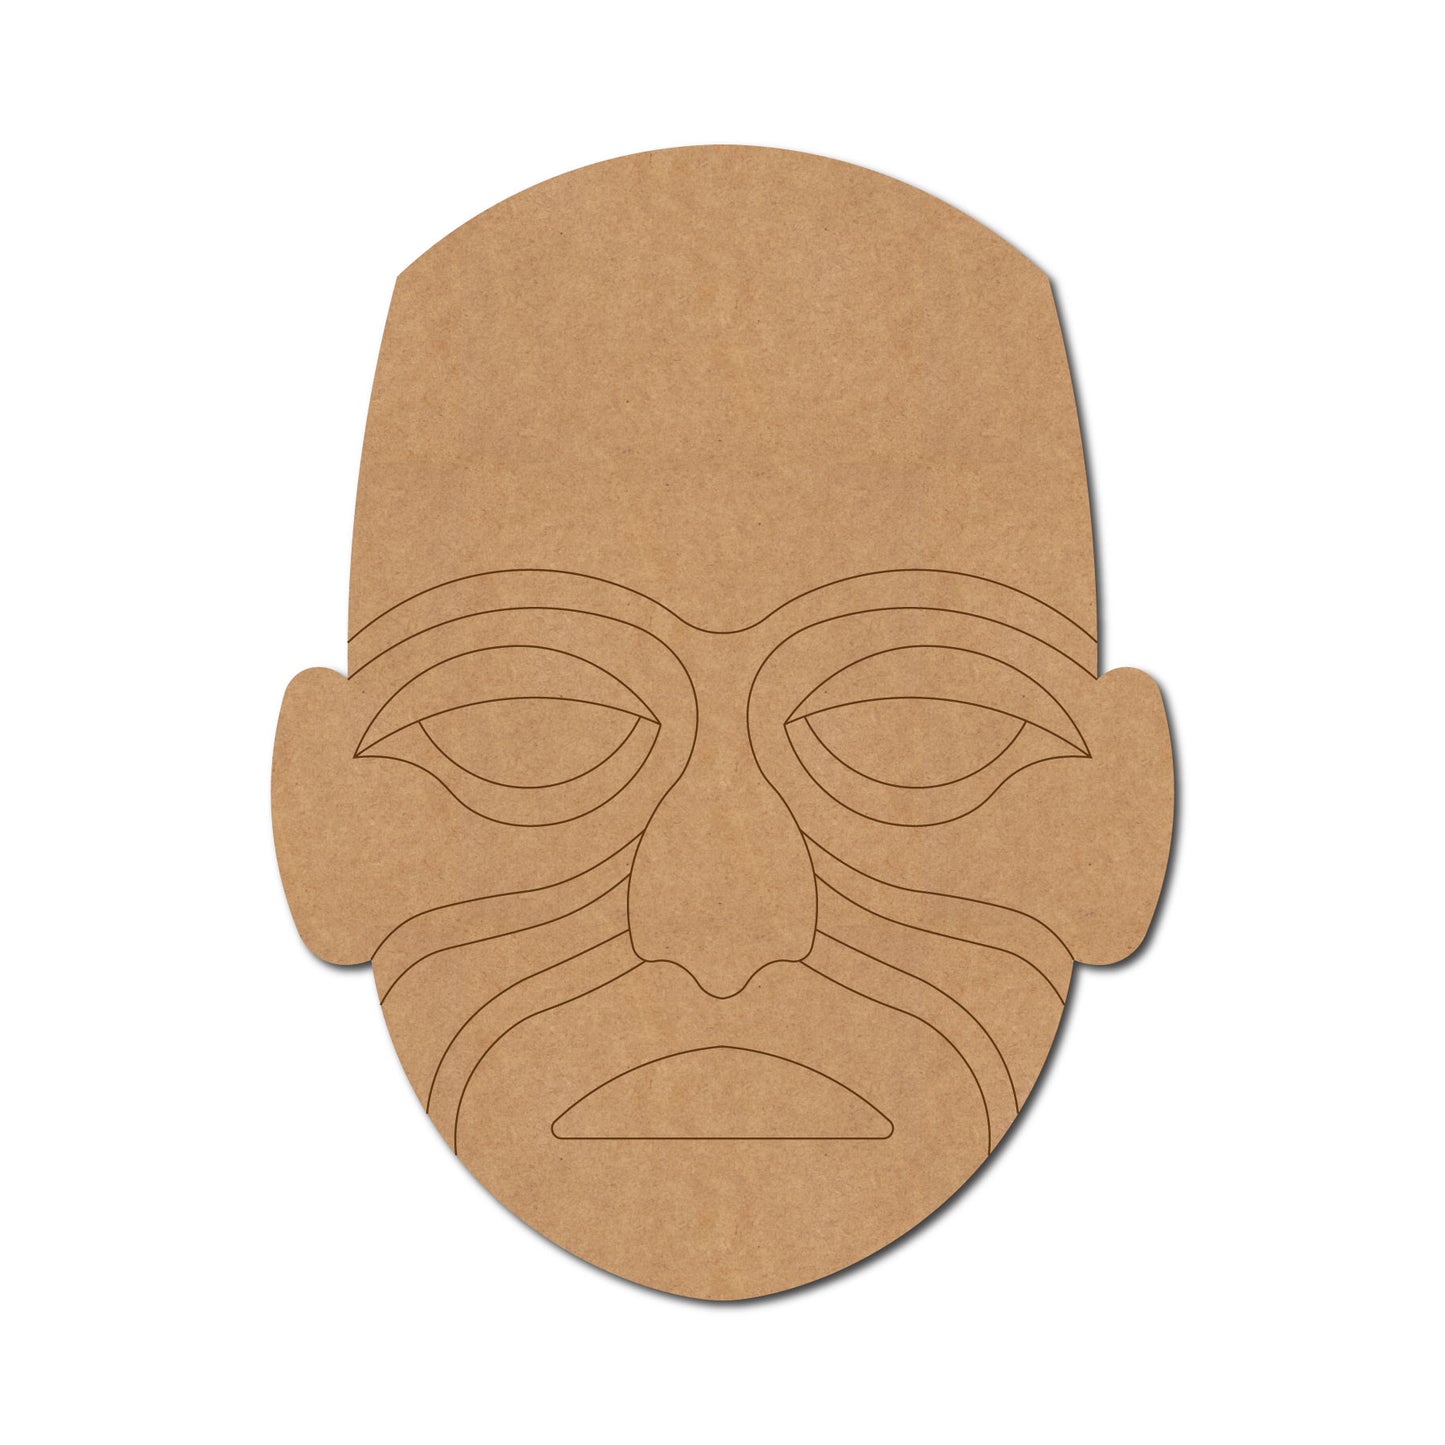 Tribal Man Face Pre Marked MDF Design 4